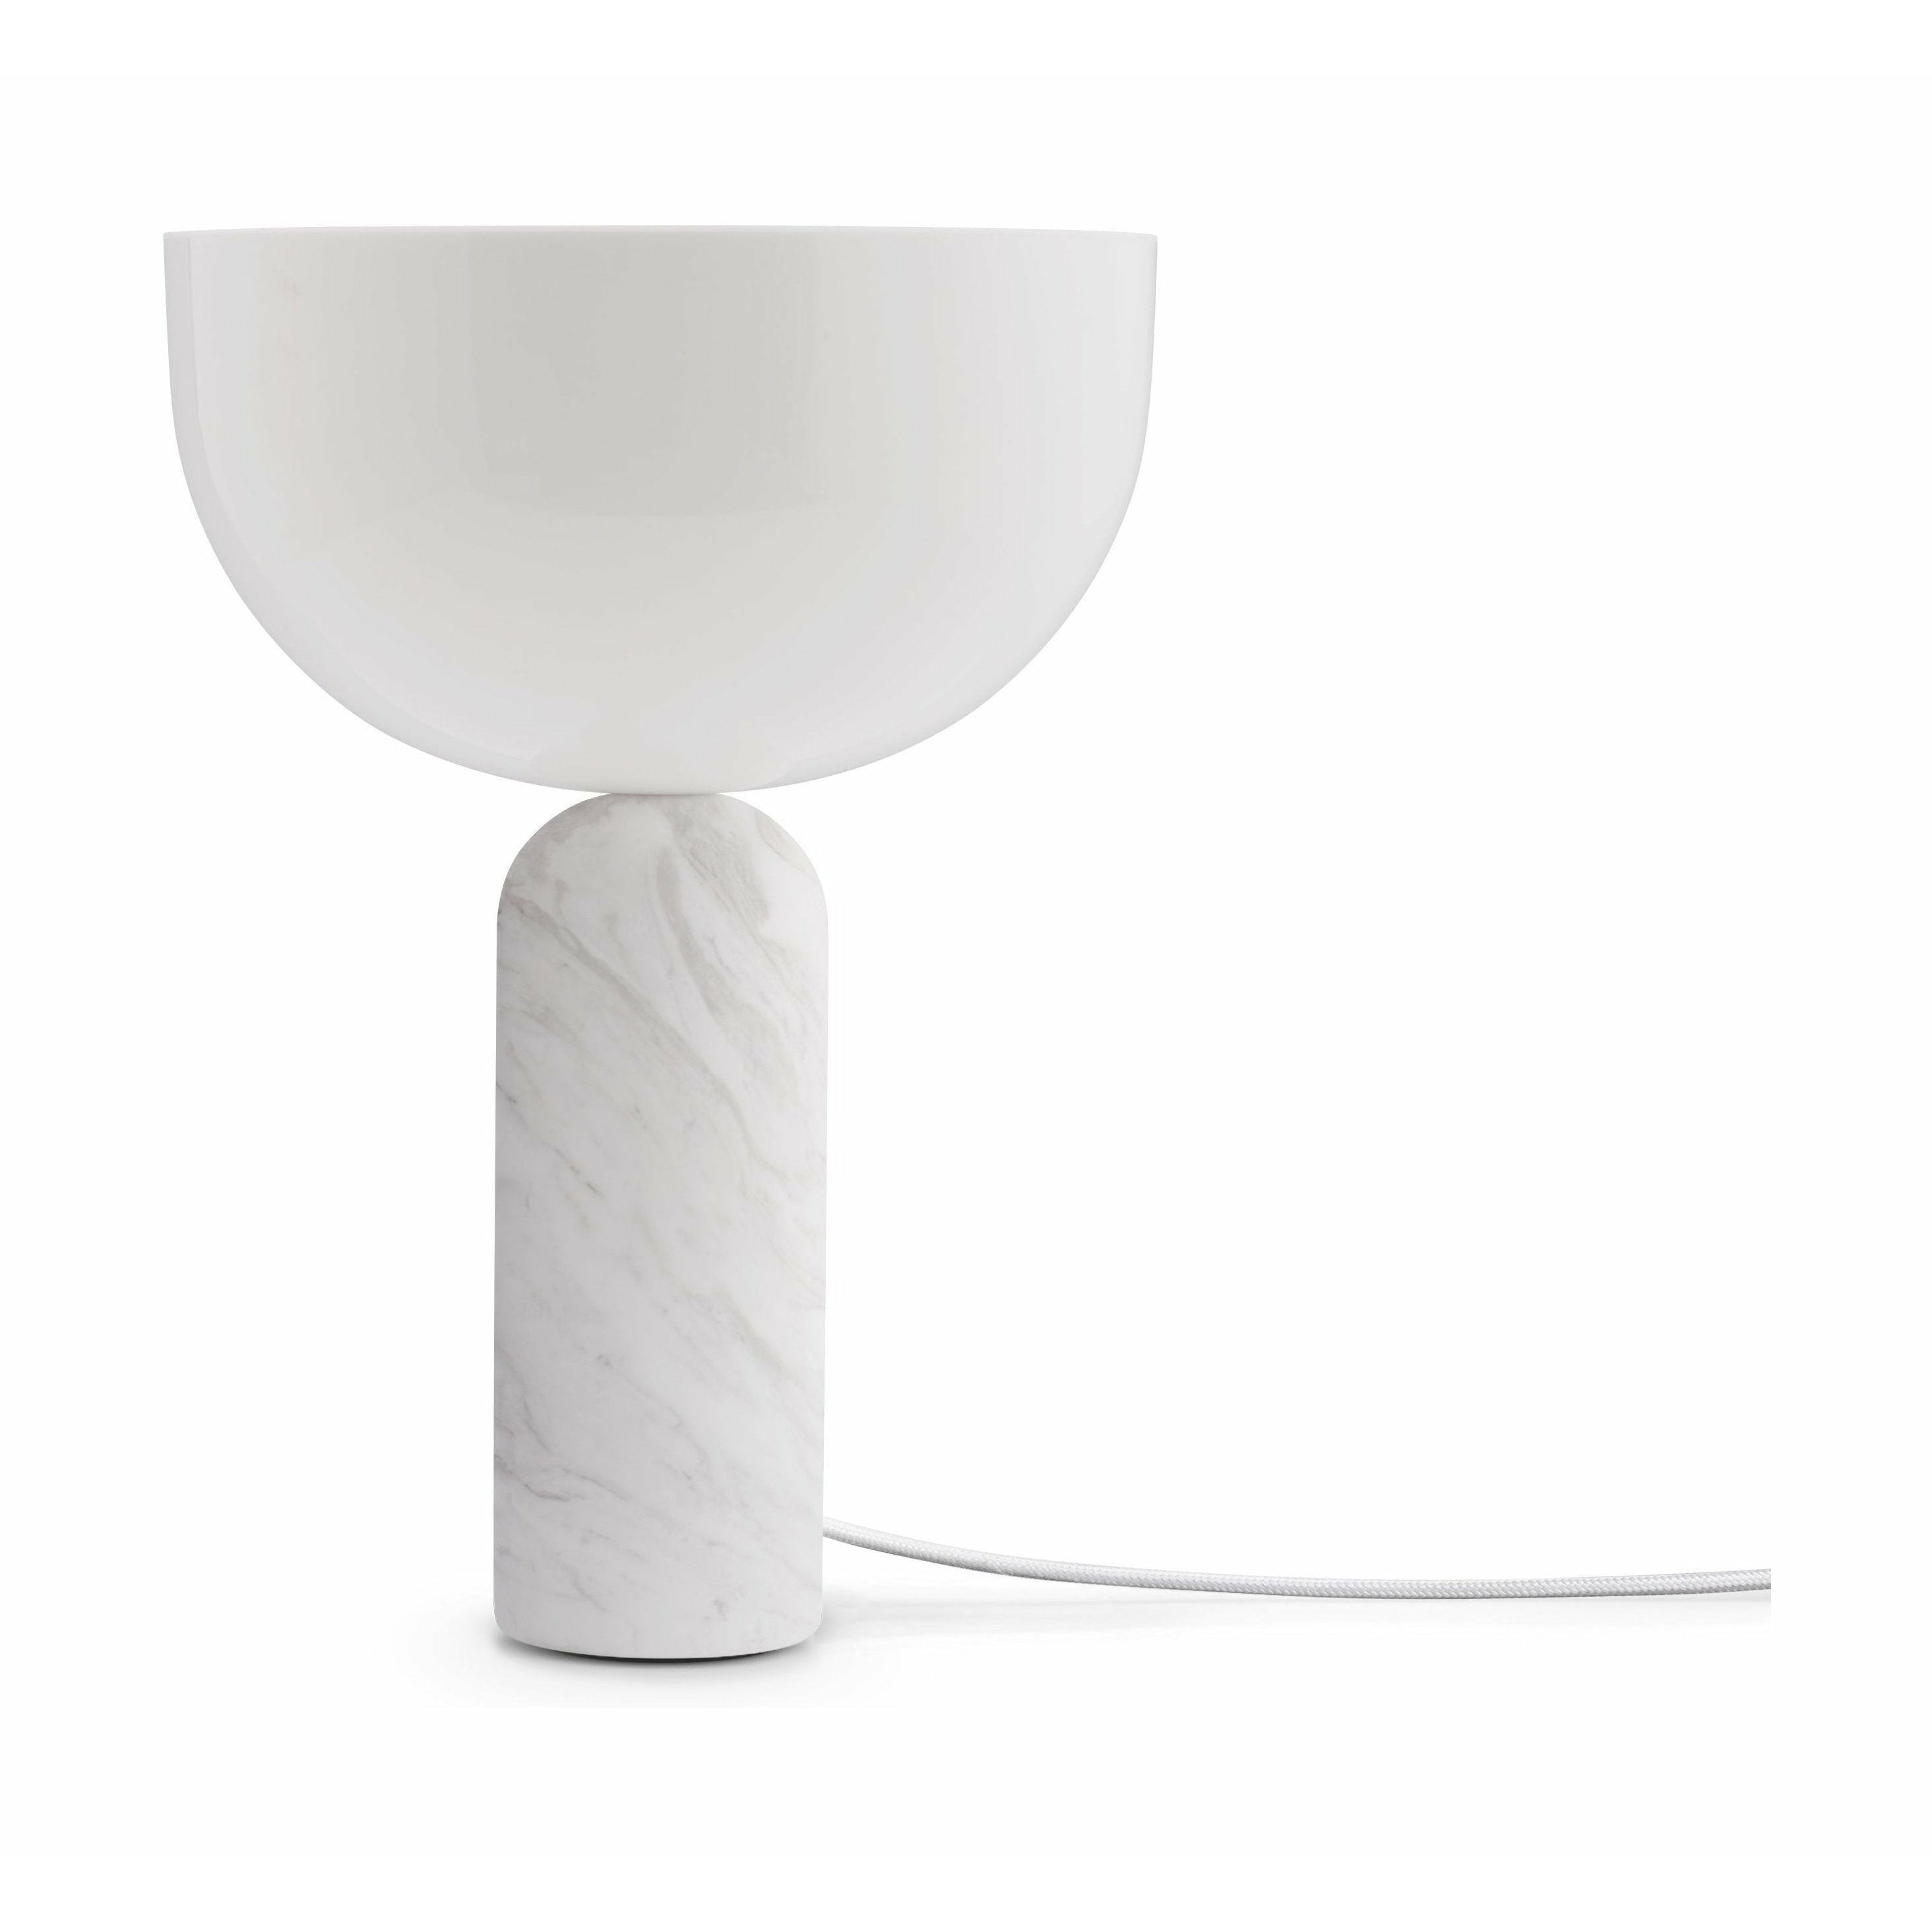 New Works Kizu bordslampa vit carrara marmor, liten